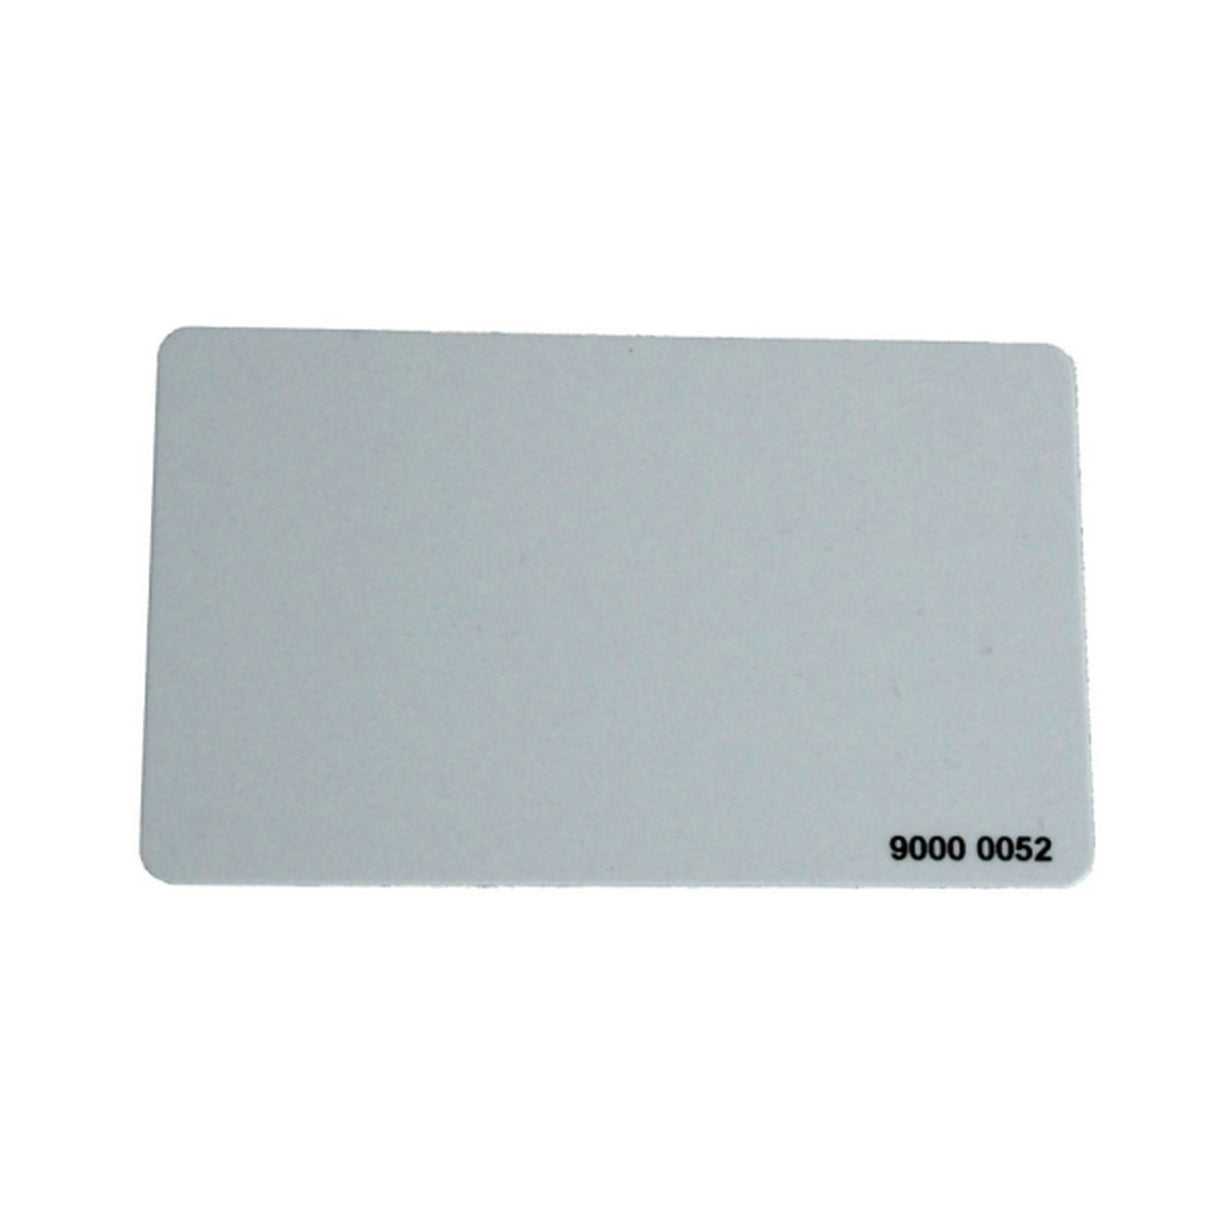 Bosch ACD-MFC-ISO MIFAREclassic Identification Proximity Card